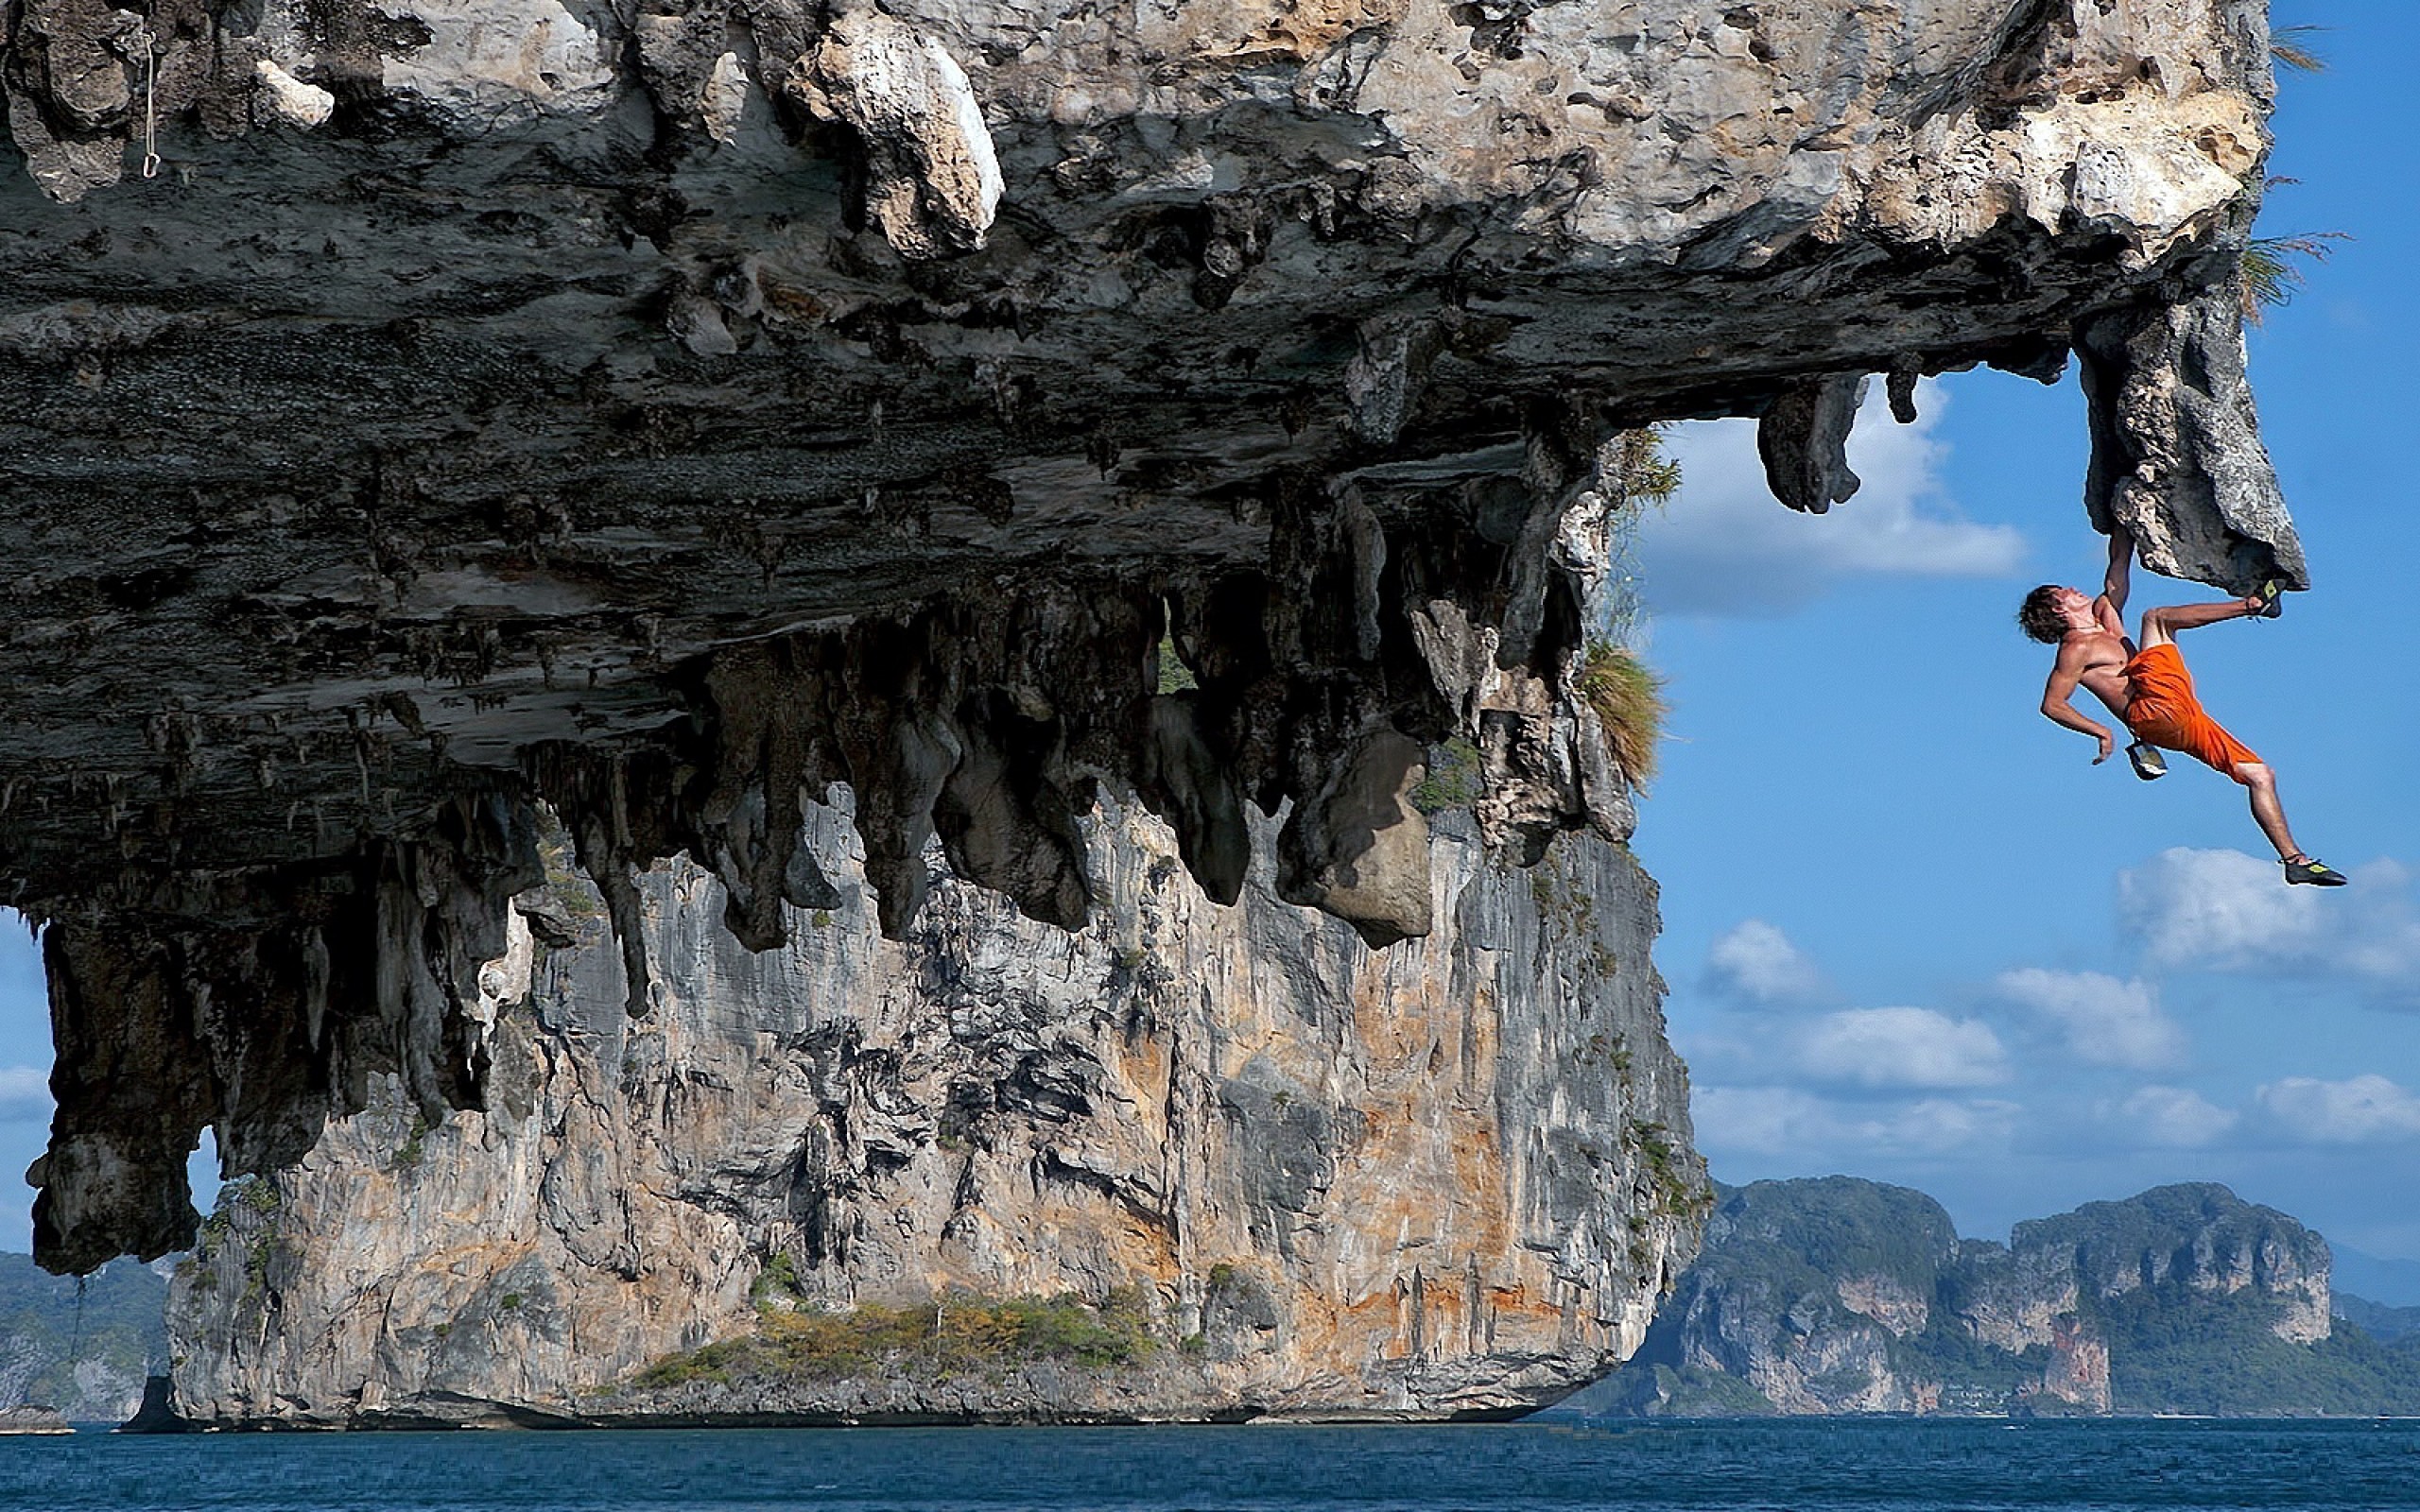 General 2560x1600 cliff climbing rocks men outdoors sport sea rock formation